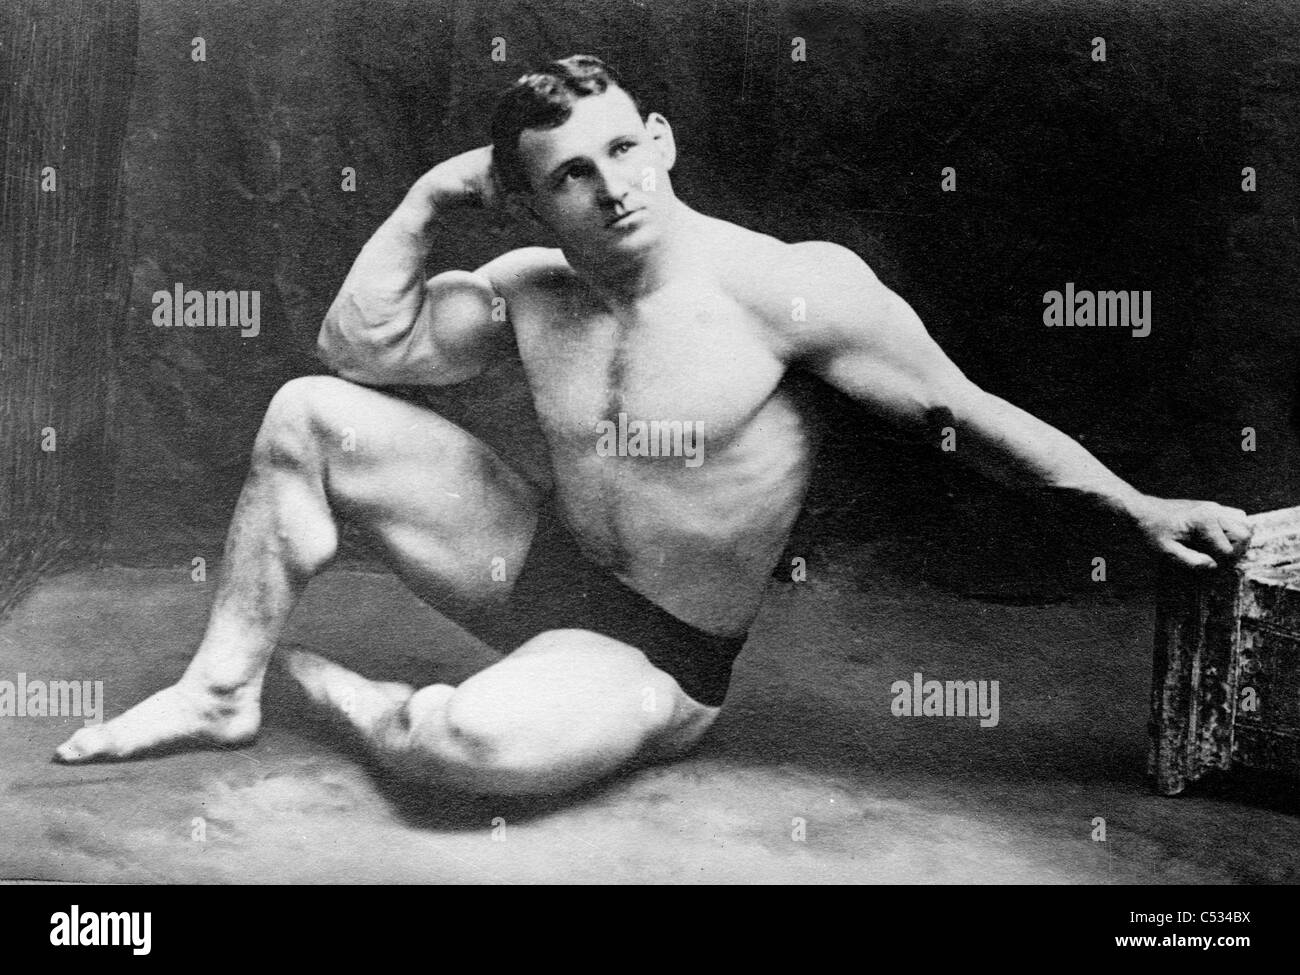 John Lemm, champion wrestler, circa 1910 - 1915 Stock Photo